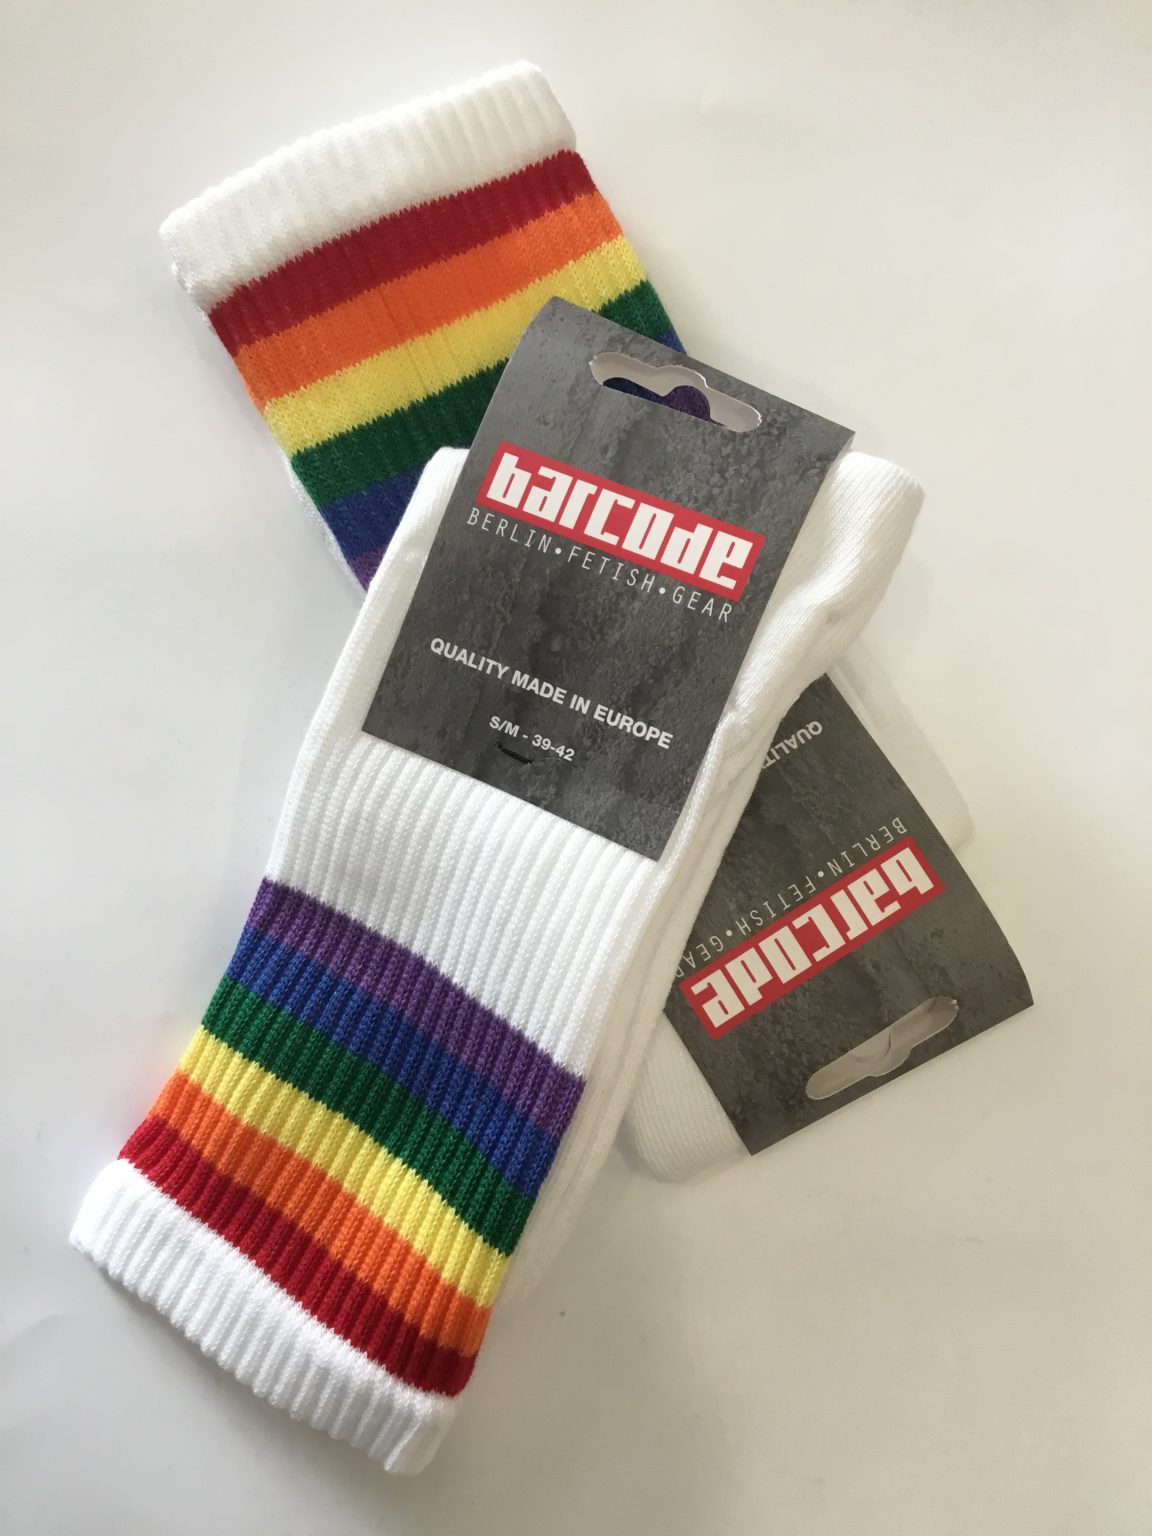 Pride themed underwear and socks back in stock!